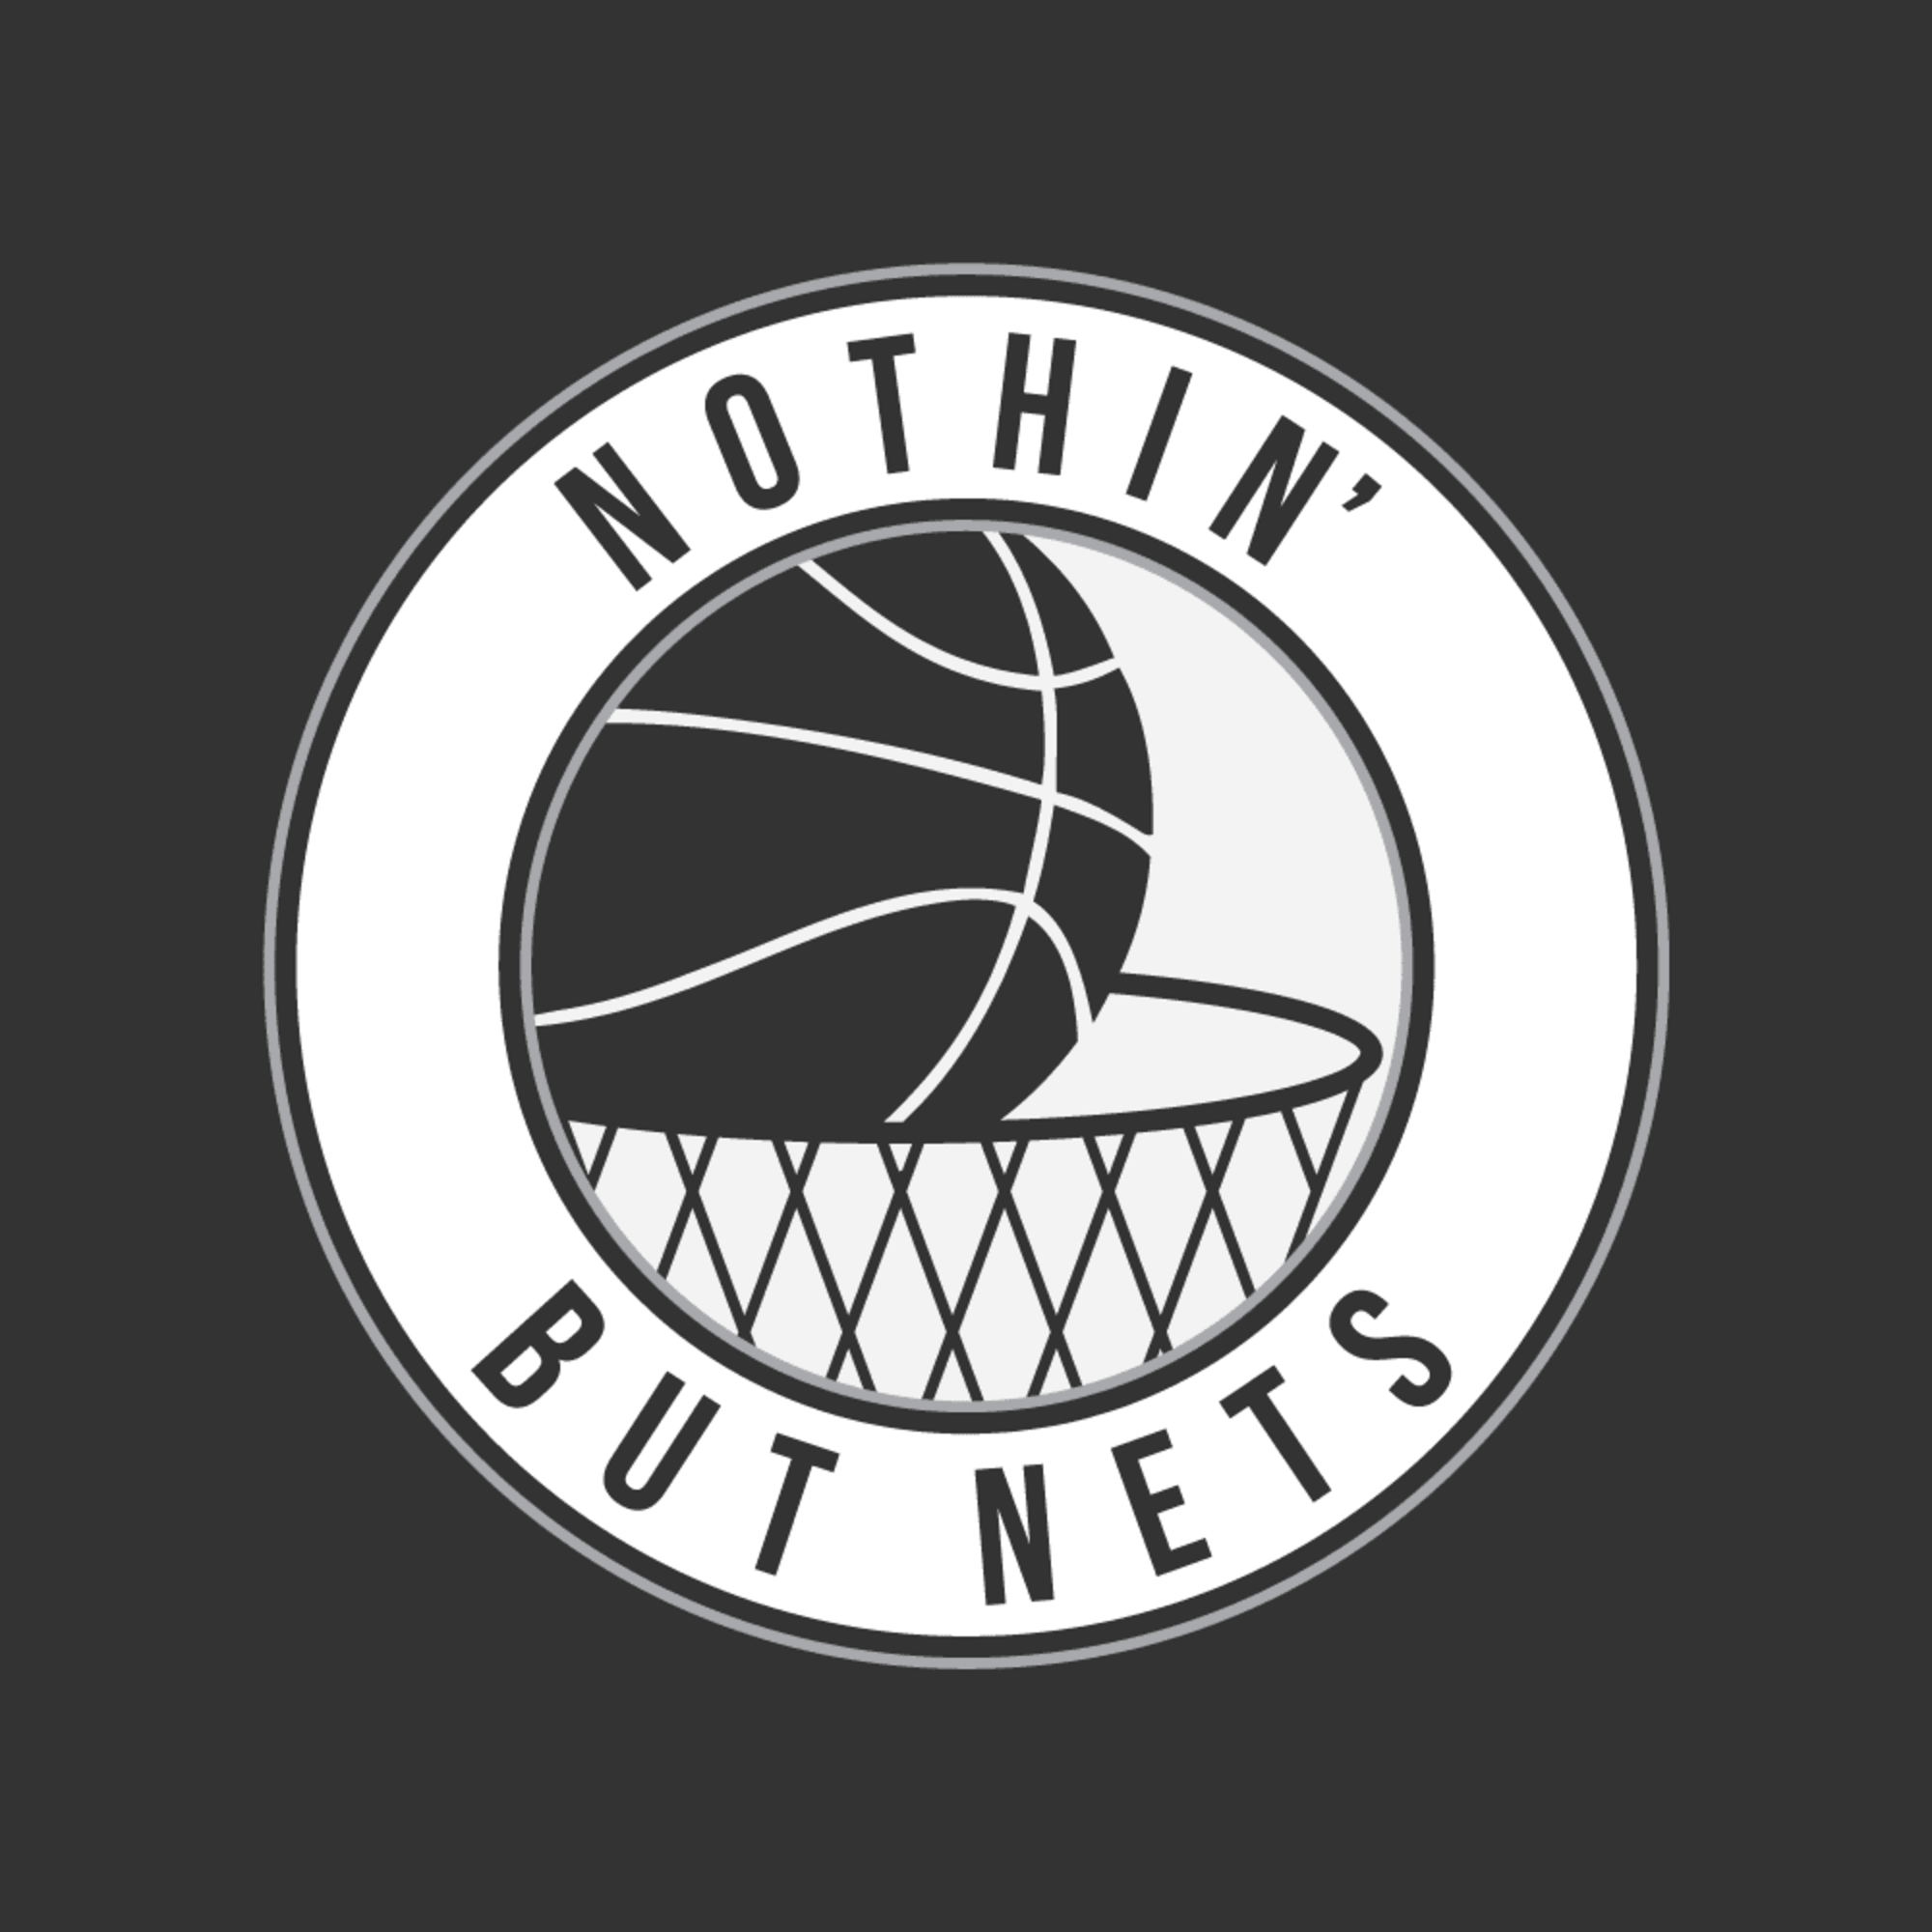 Brooklyn Nets News, Rumors, and Fan Community - Nothin' But Nets